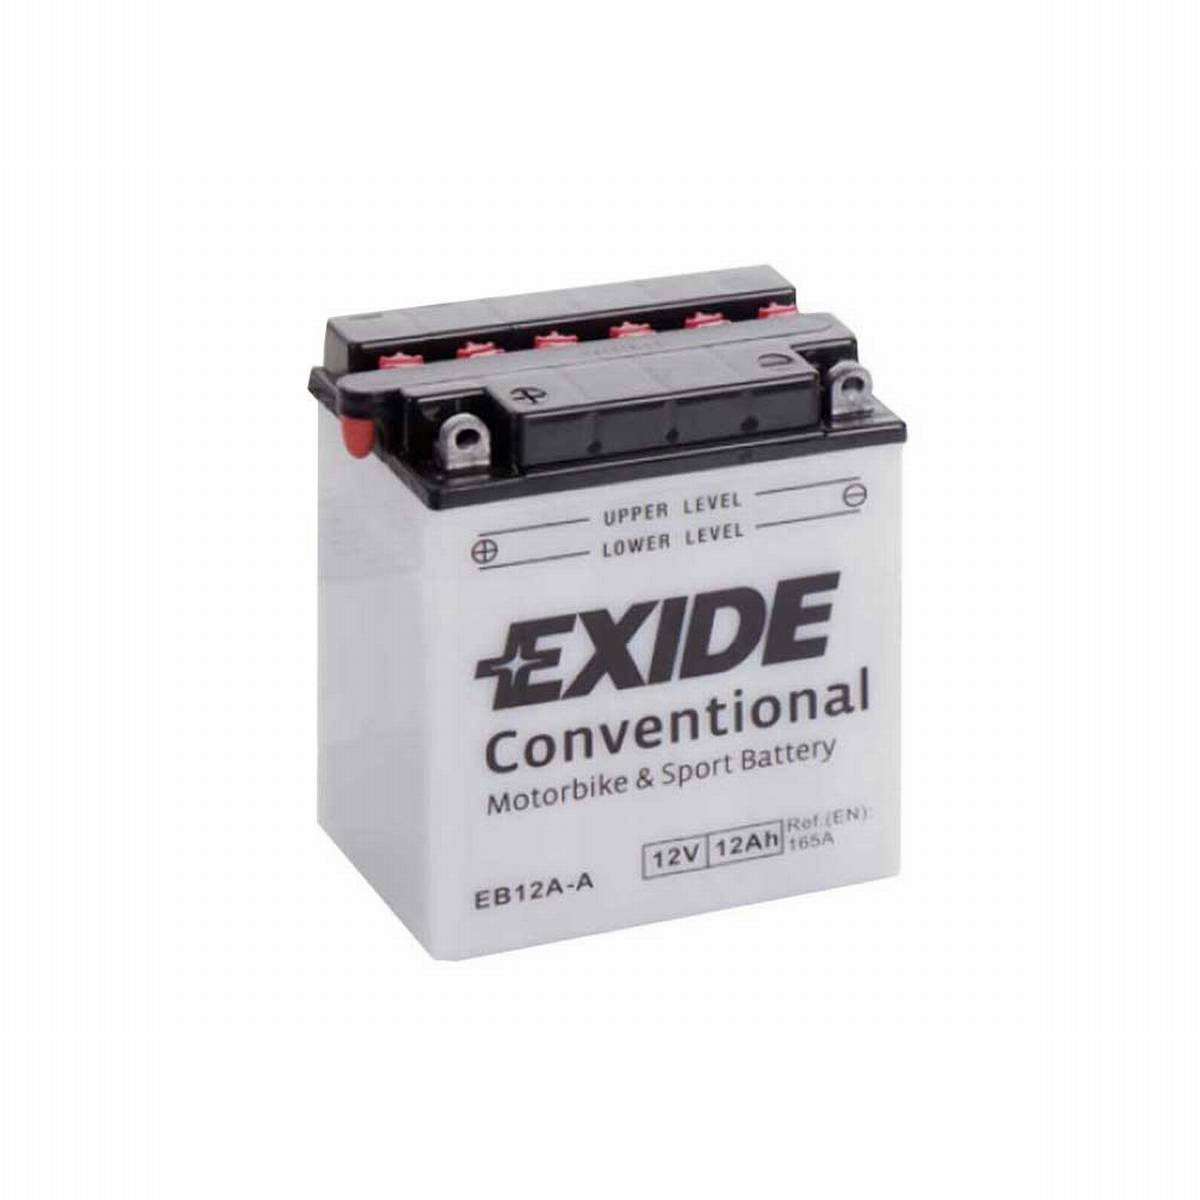 Exide EB12A-A Bike Motorradbatterie 12V 12Ah 165A DIN 51211